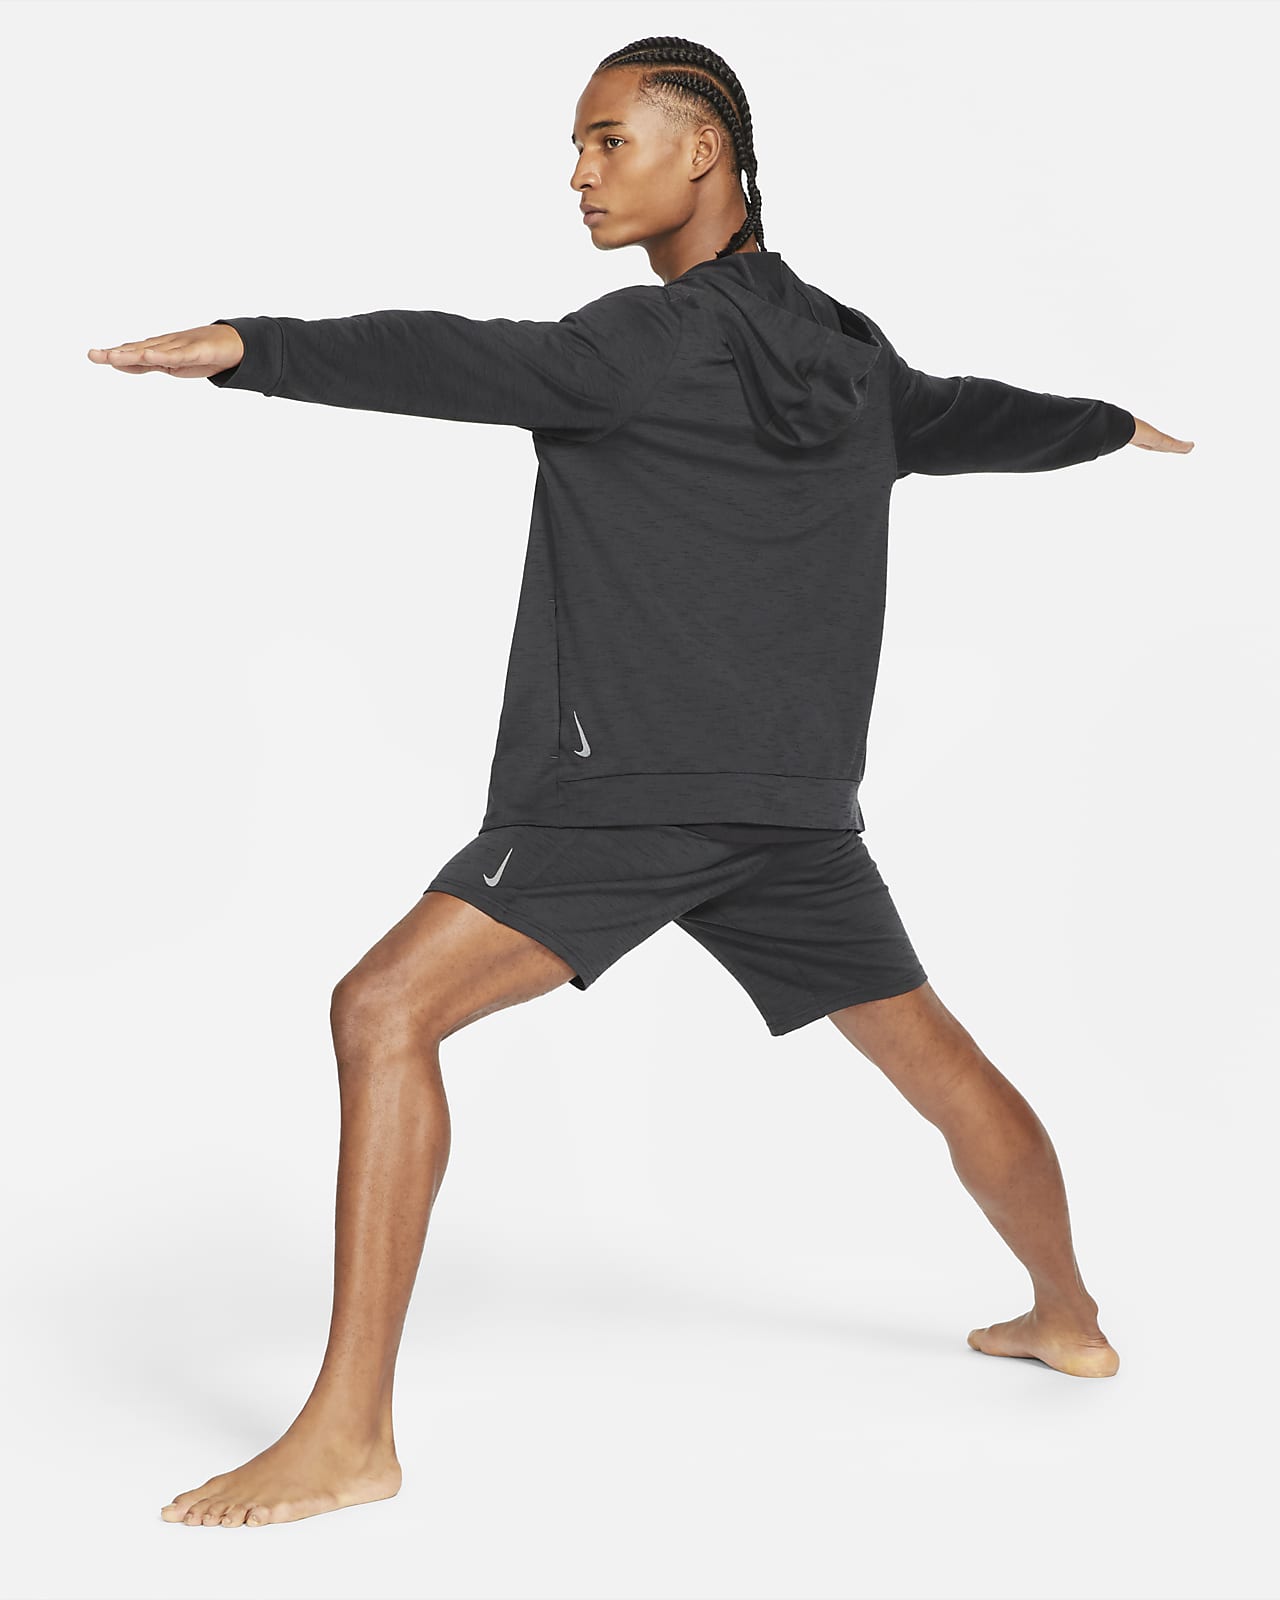 Yoga. Nike IL